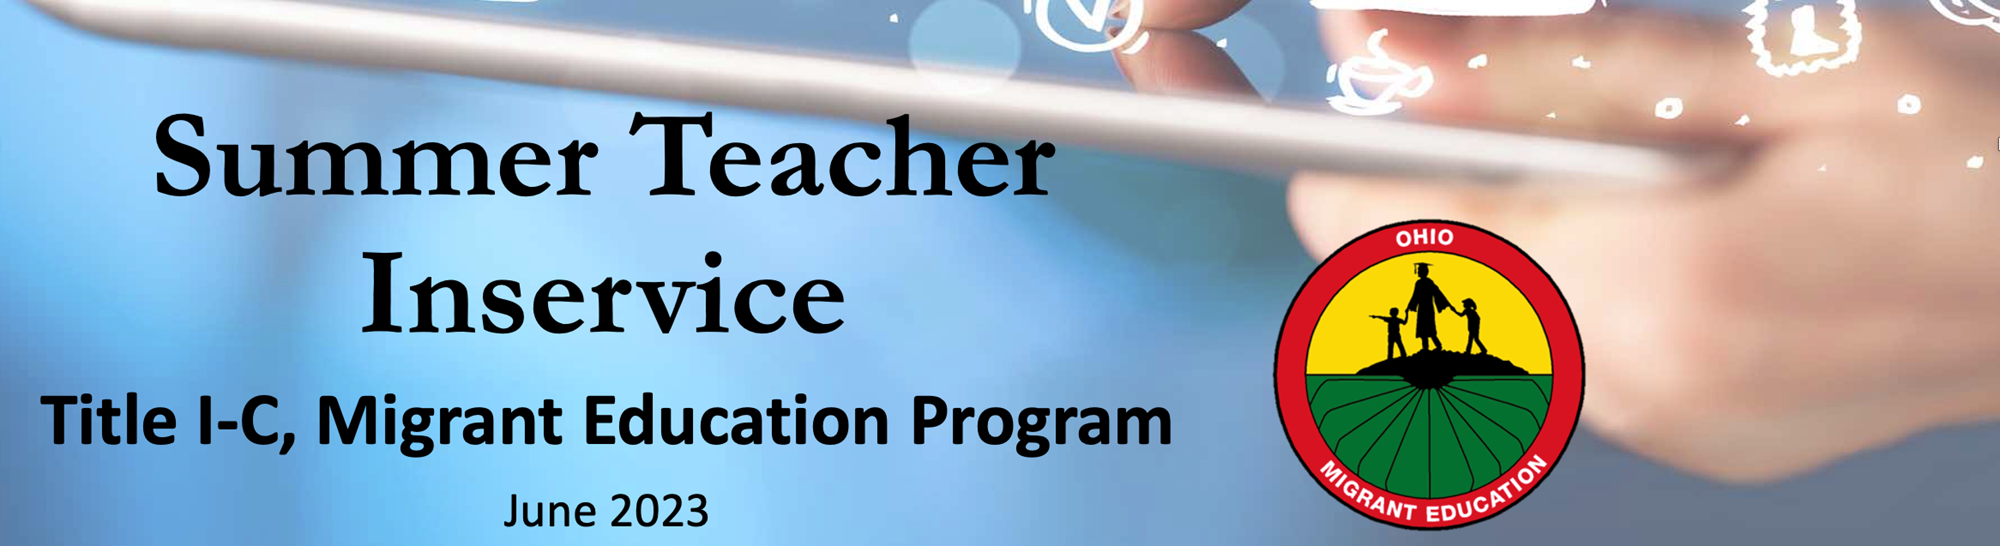 Summer Teacher Inservice, Title I-C, Migrant Education Program, June 2023